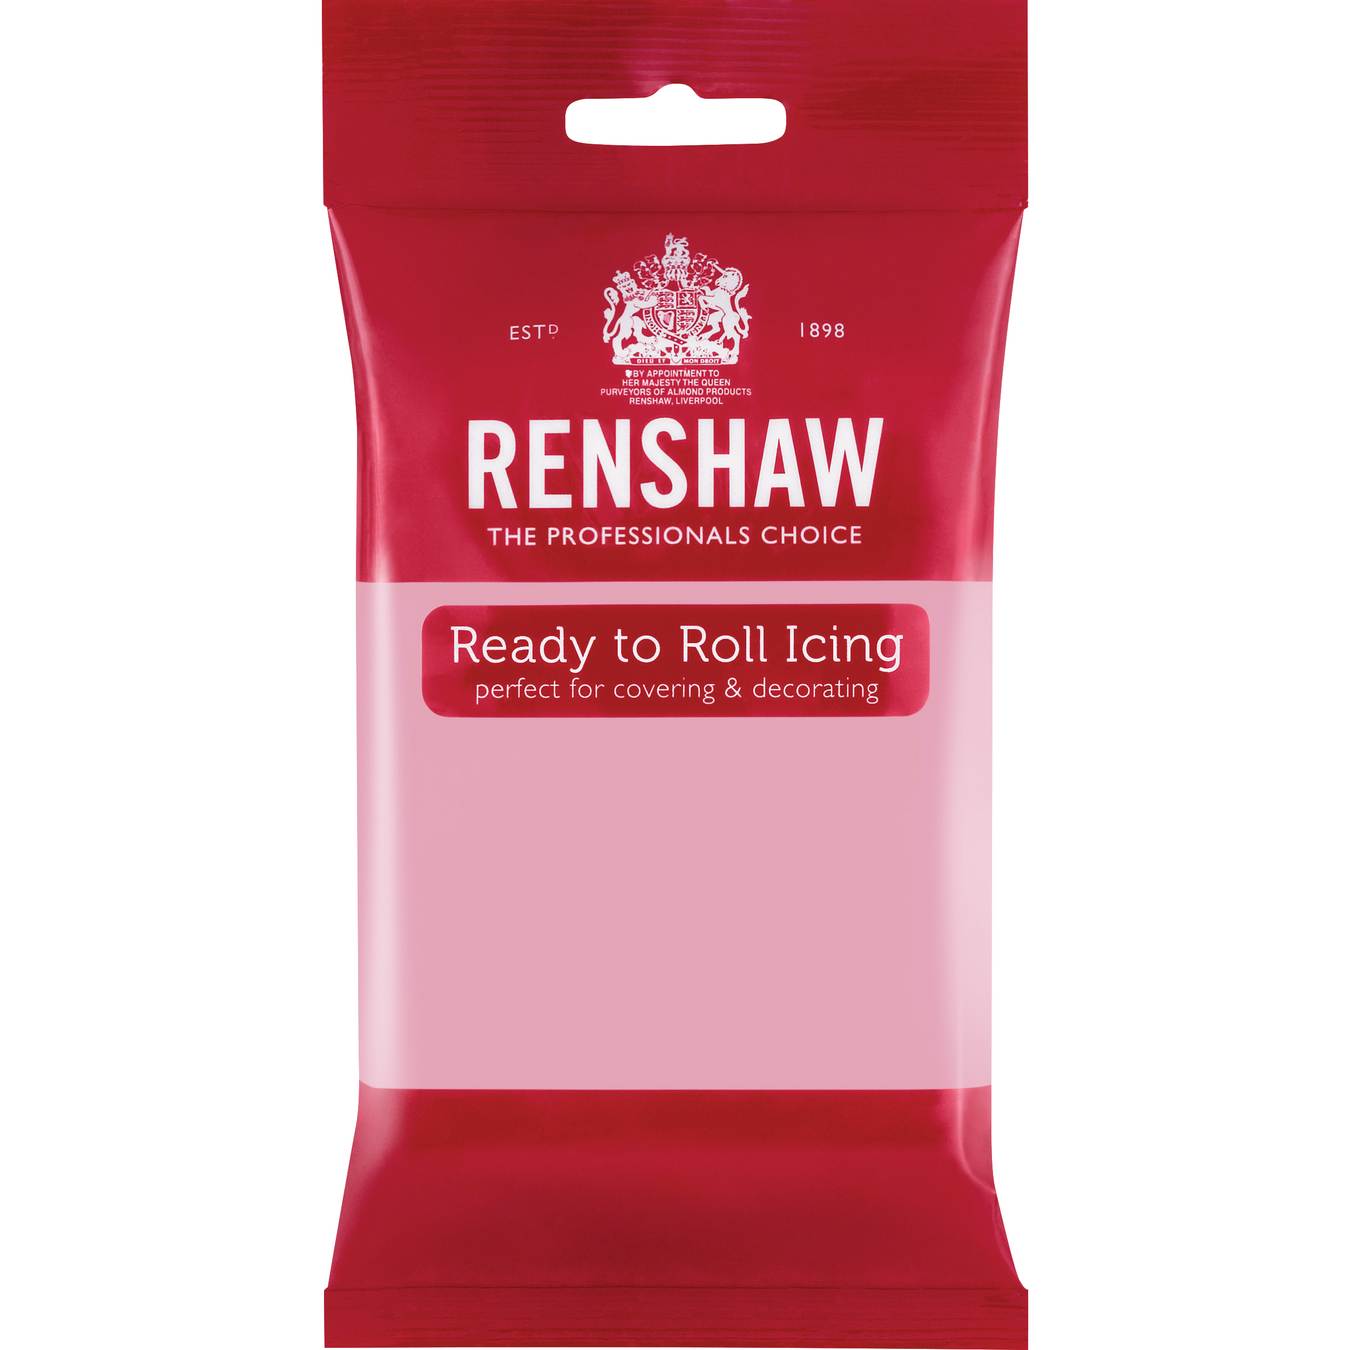 Renshaw's